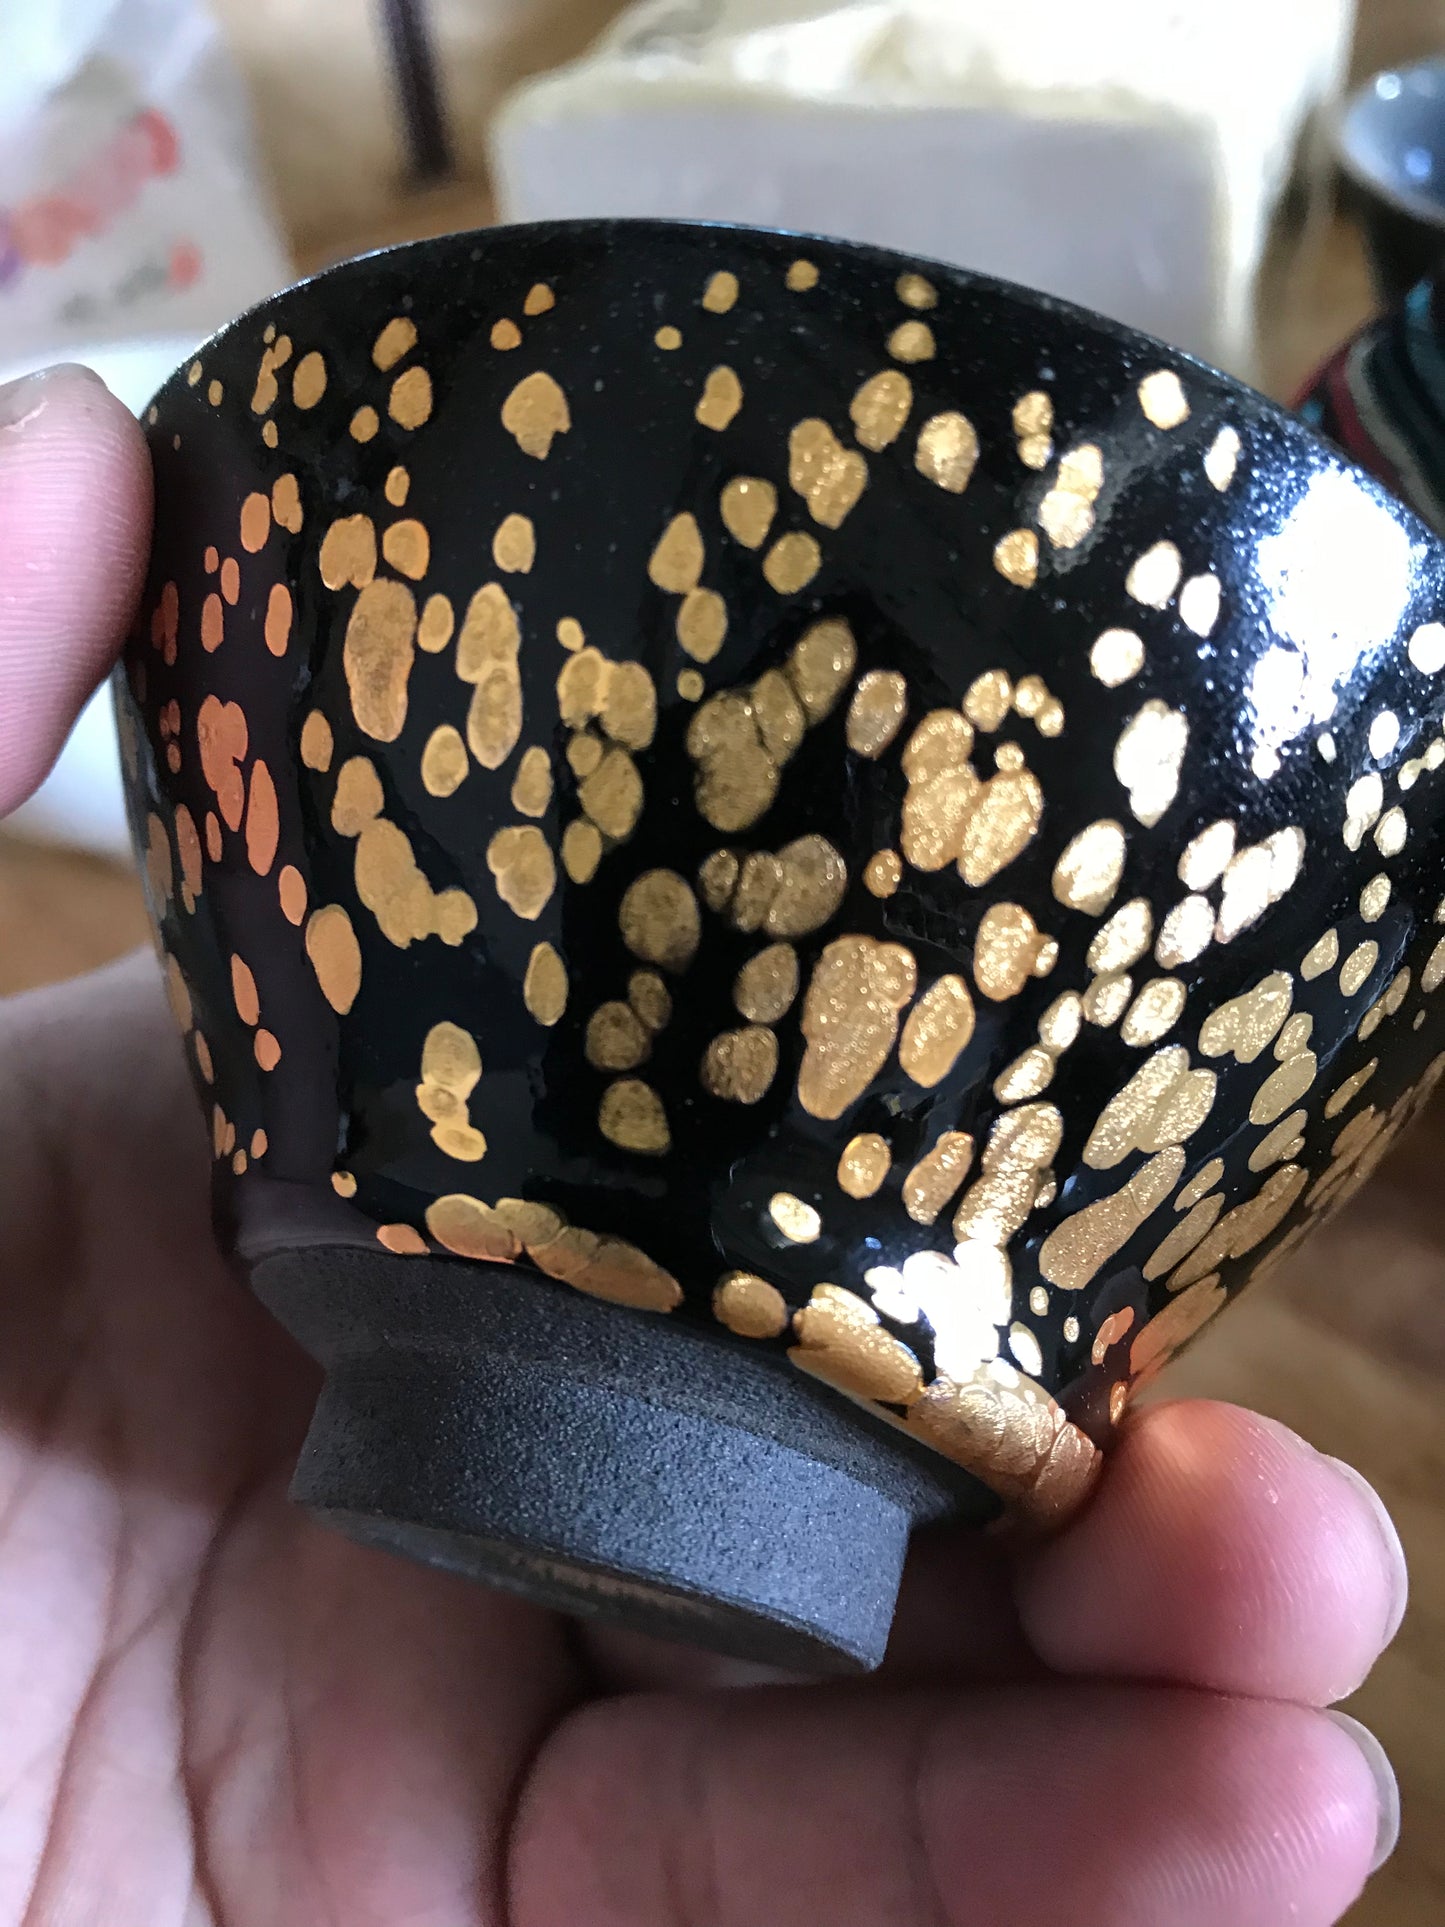 Golden And Black Jian Ware Tenmoku Cup China Traditional|Best Ceramics